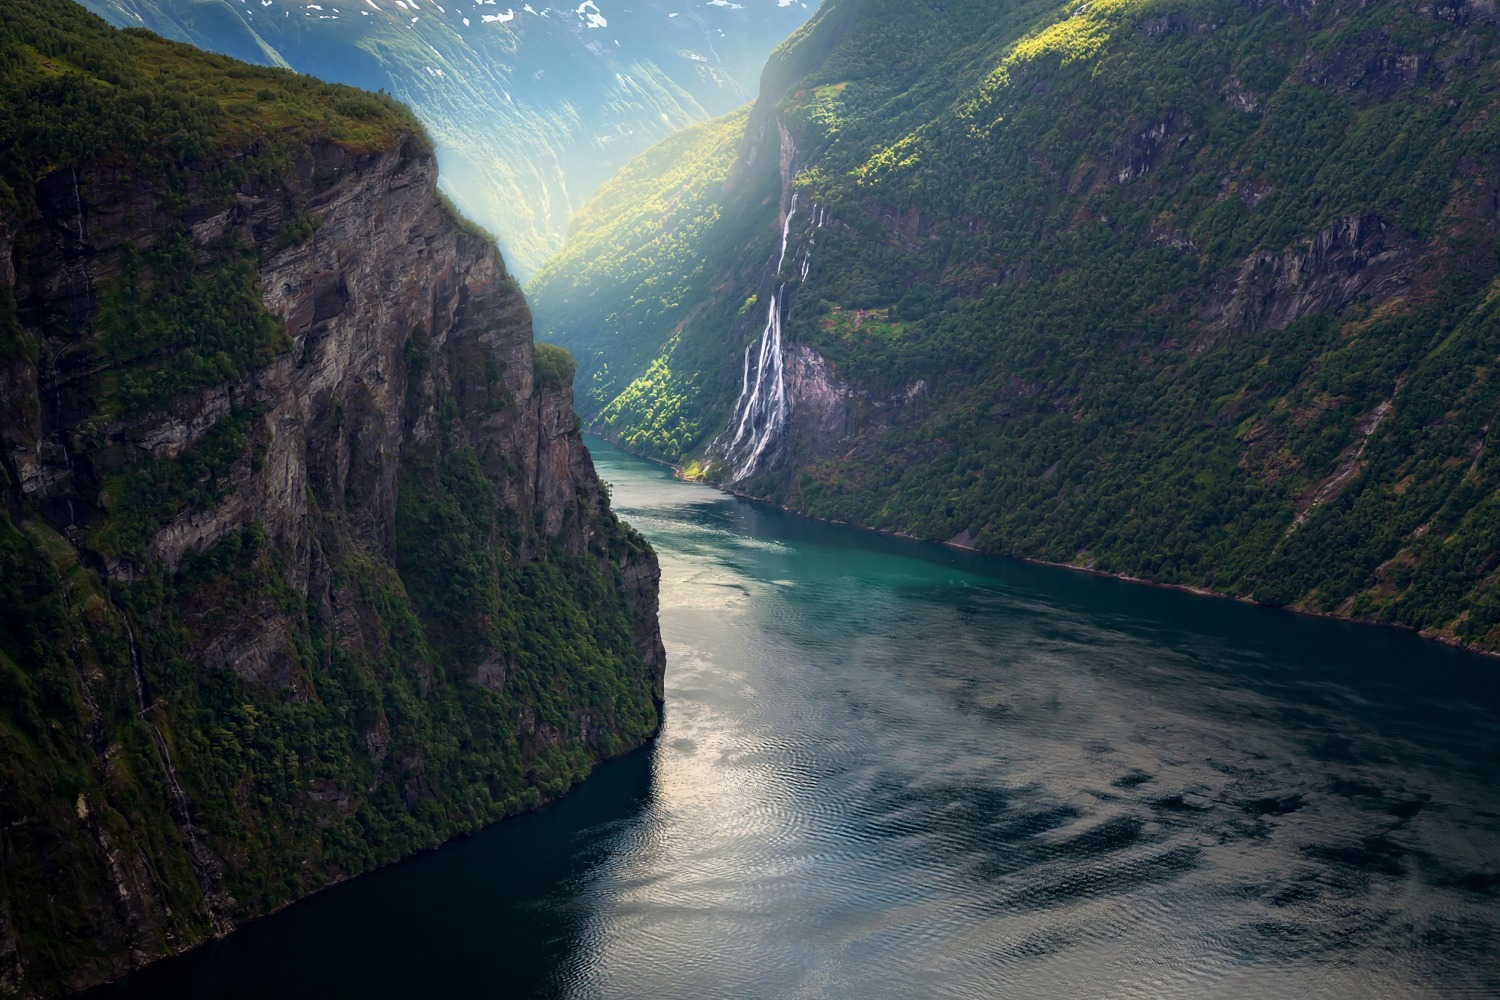 751861 descargar imagen tierra/naturaleza, fiordo, lago, montaña, noruega: fondos de pantalla y protectores de pantalla gratis